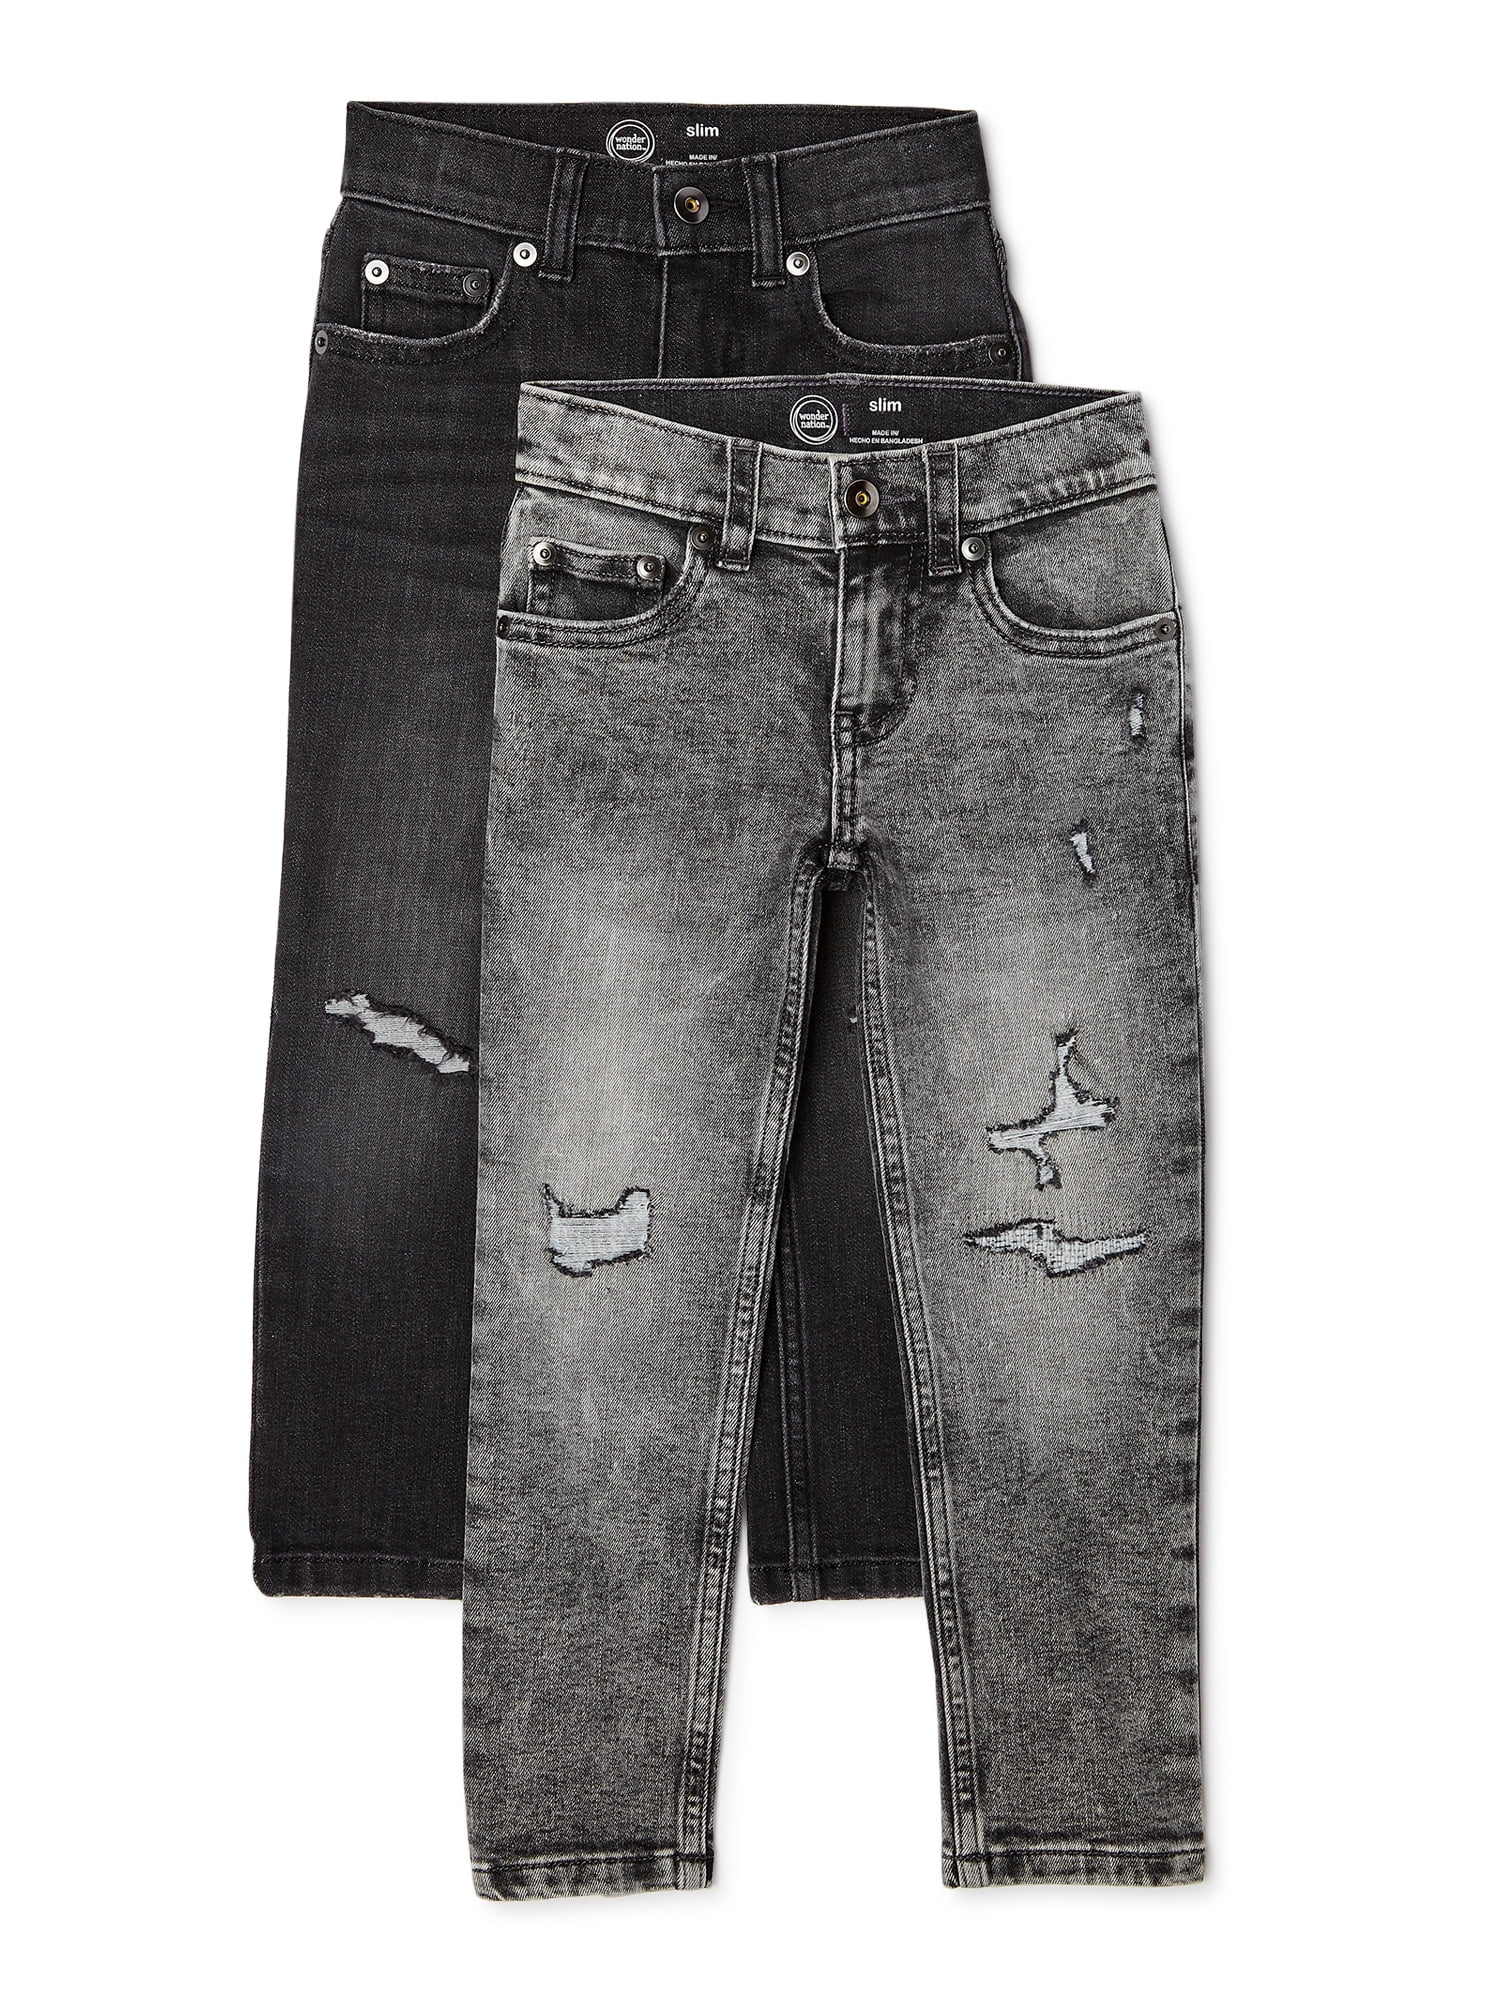 Details about   NWT Boys/Kids Arizona Jeans Size 14 Husky Slim Fit Blue/Dark Blue/Gray Pants 